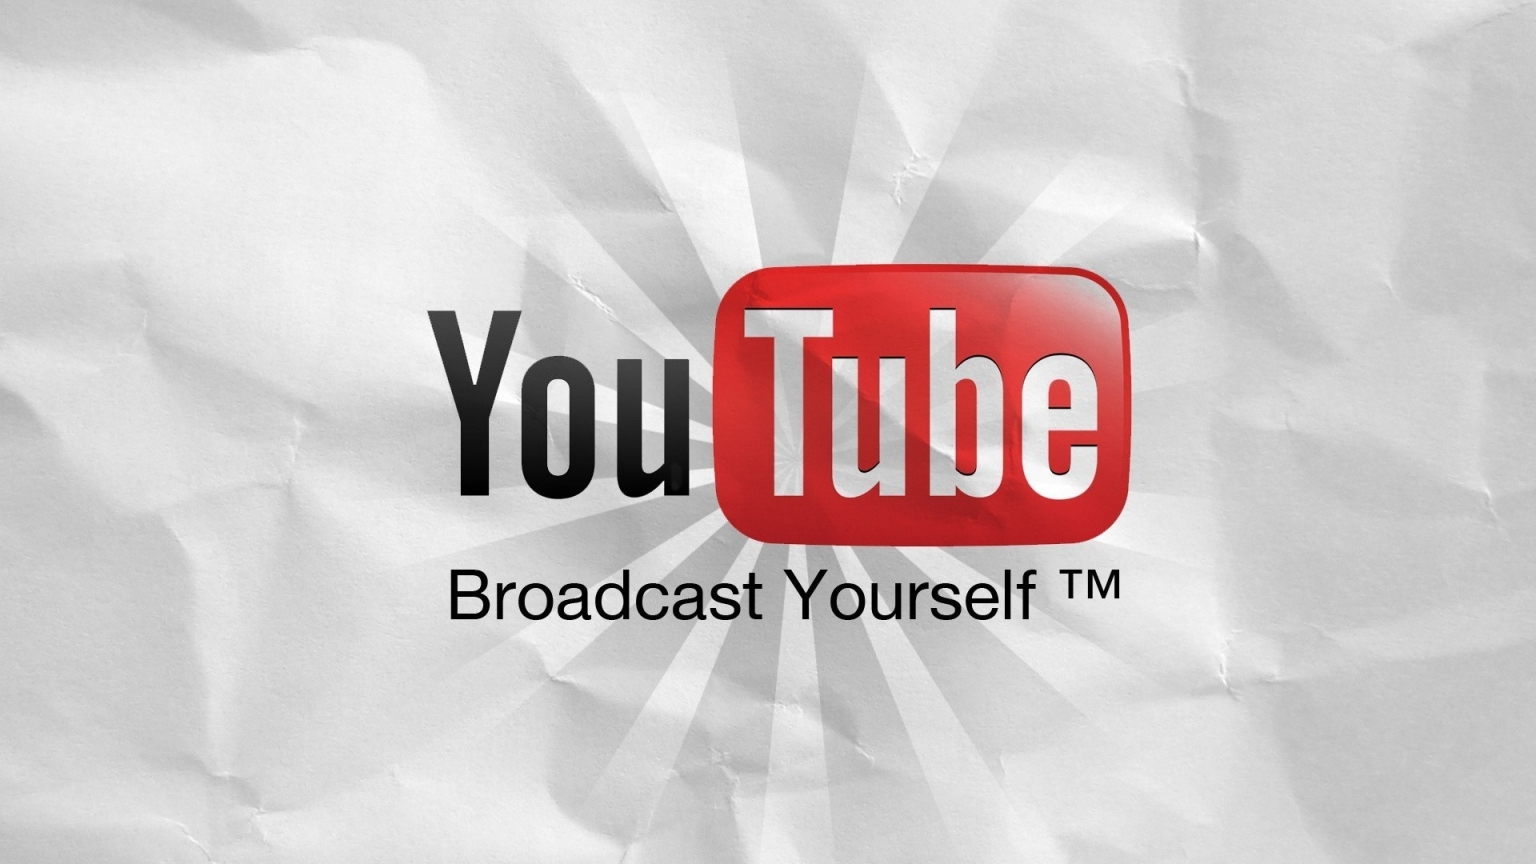 YouTube for 1536 x 864 HDTV resolution